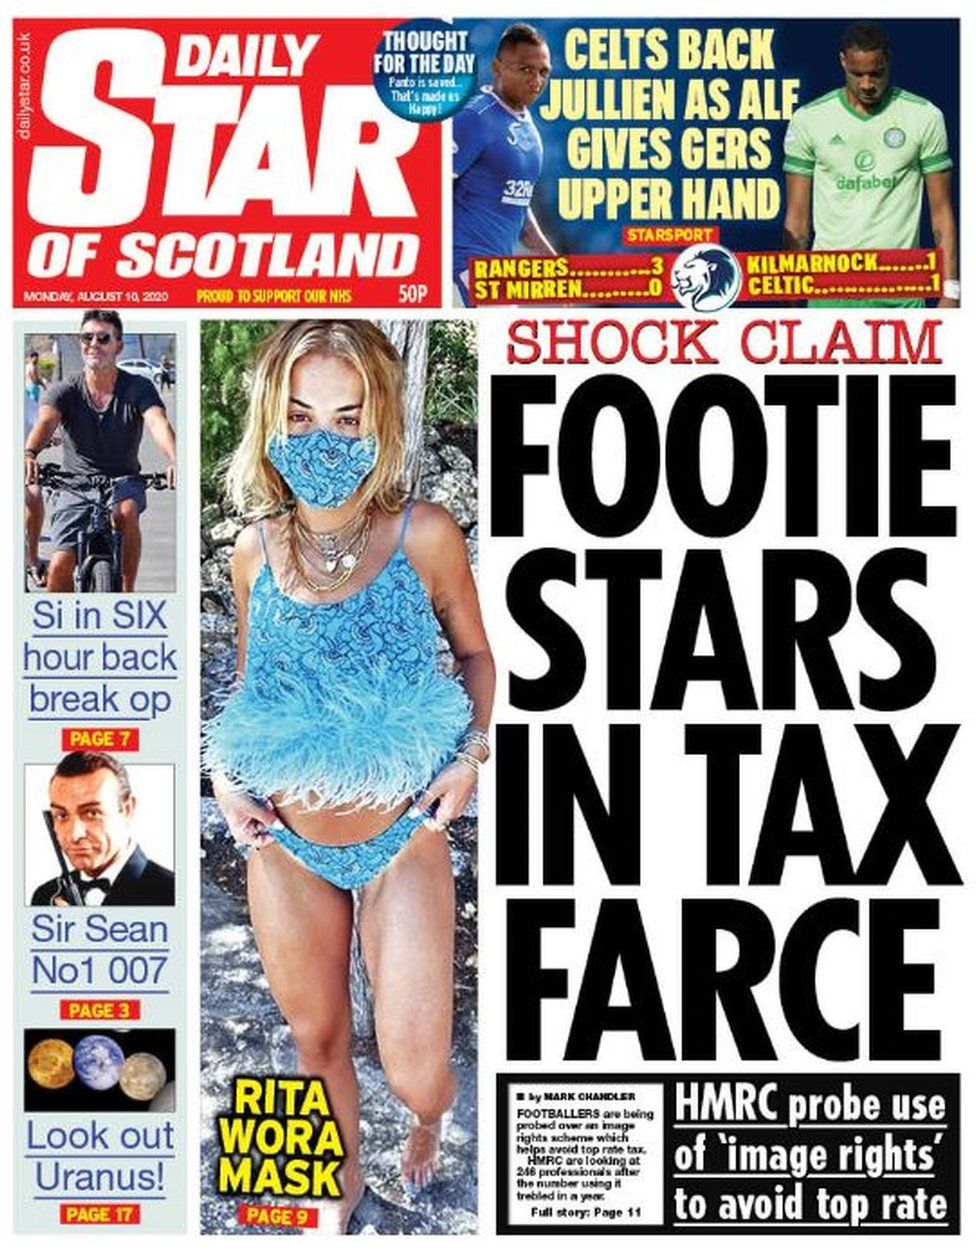 Daily Star of Scotland